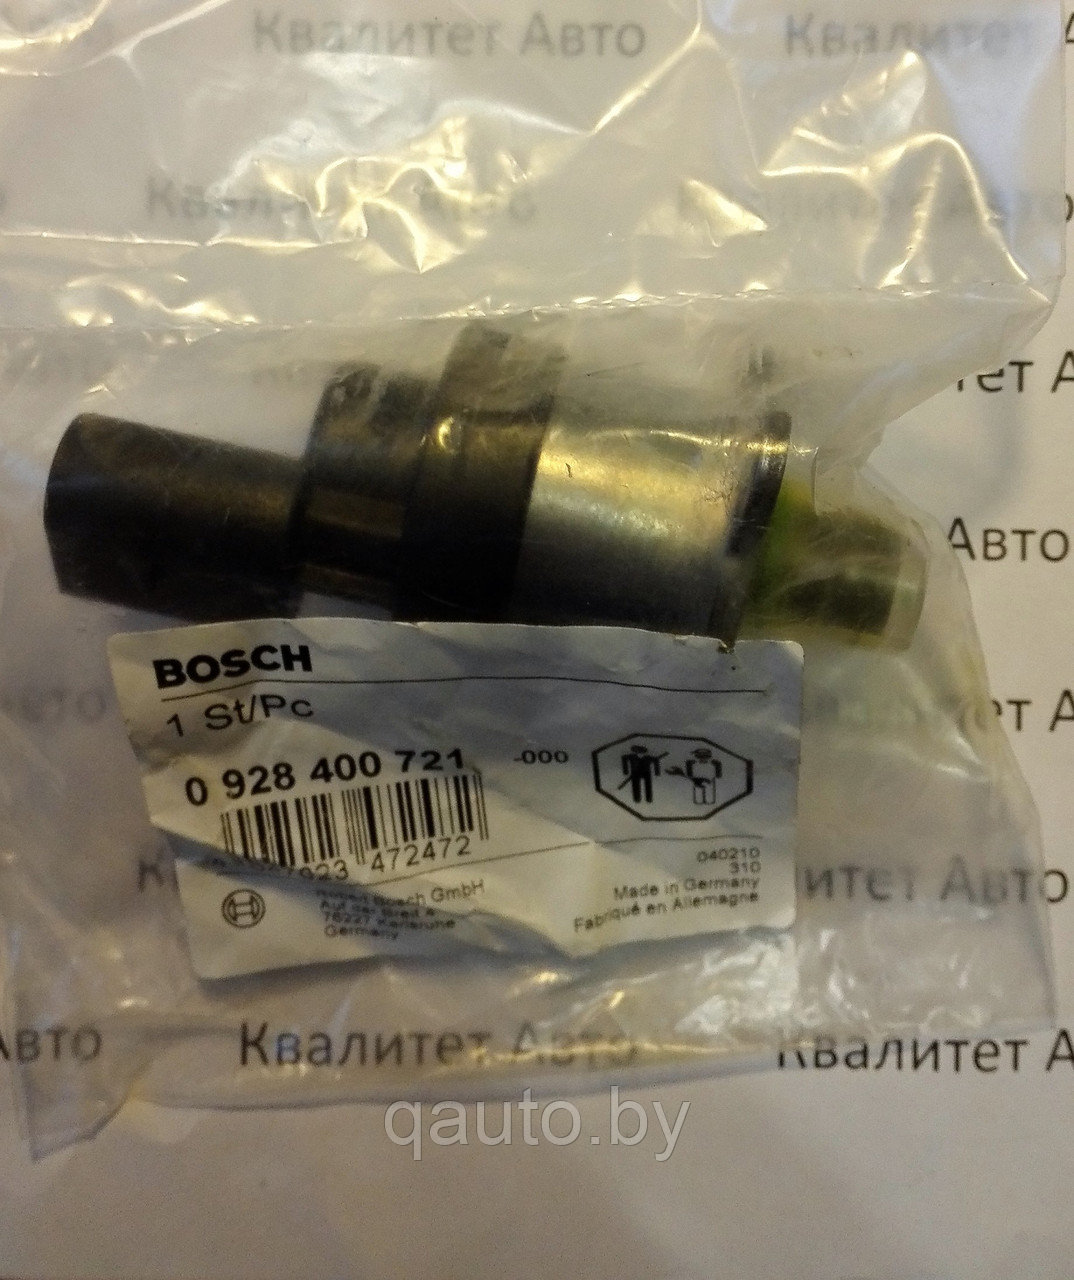 Дозирующий блок ТВНД Bosch 0928400721 VW LT 2.8TDI, фото 1